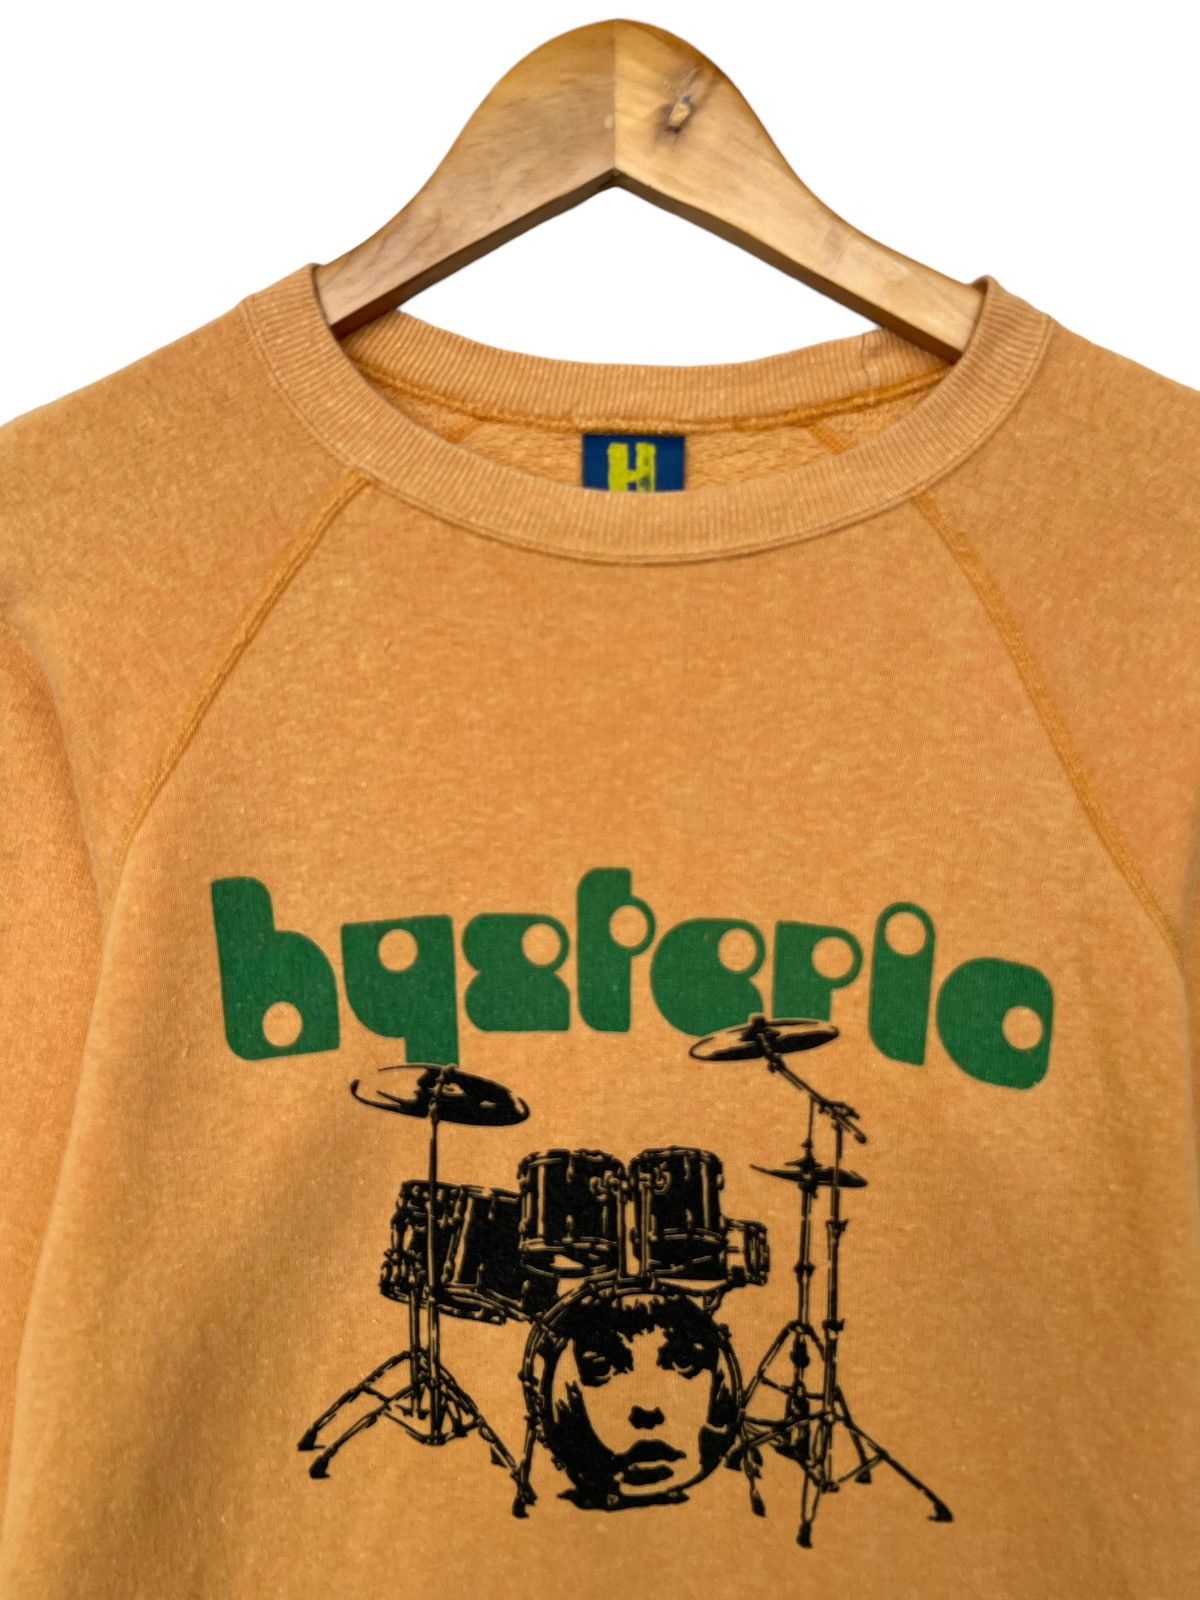 Vintage Hysteric Glamour Drum Sweatshirt size S - 3